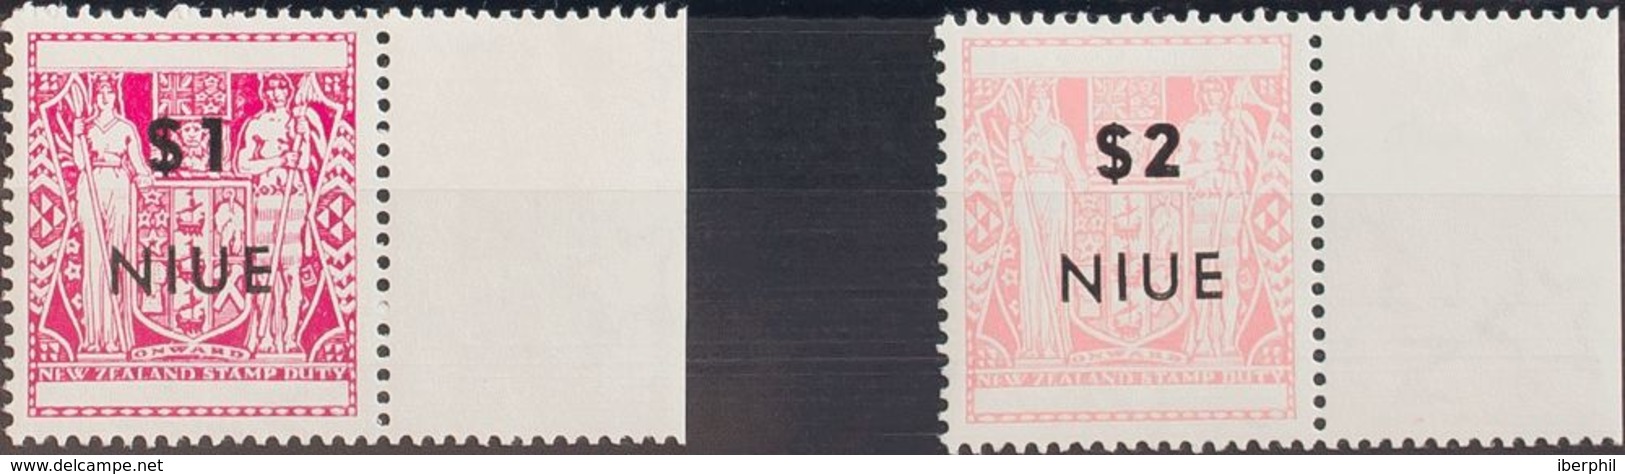 Niue. MNH **Yv 104/05b. 1967. 1 $ Lila Rosa Y 2 $ Rosa. Sobrecarga "NIVE" (más Delgada). MAGNIFICOS. Yvert 2008: 27,5 Eu - Niue